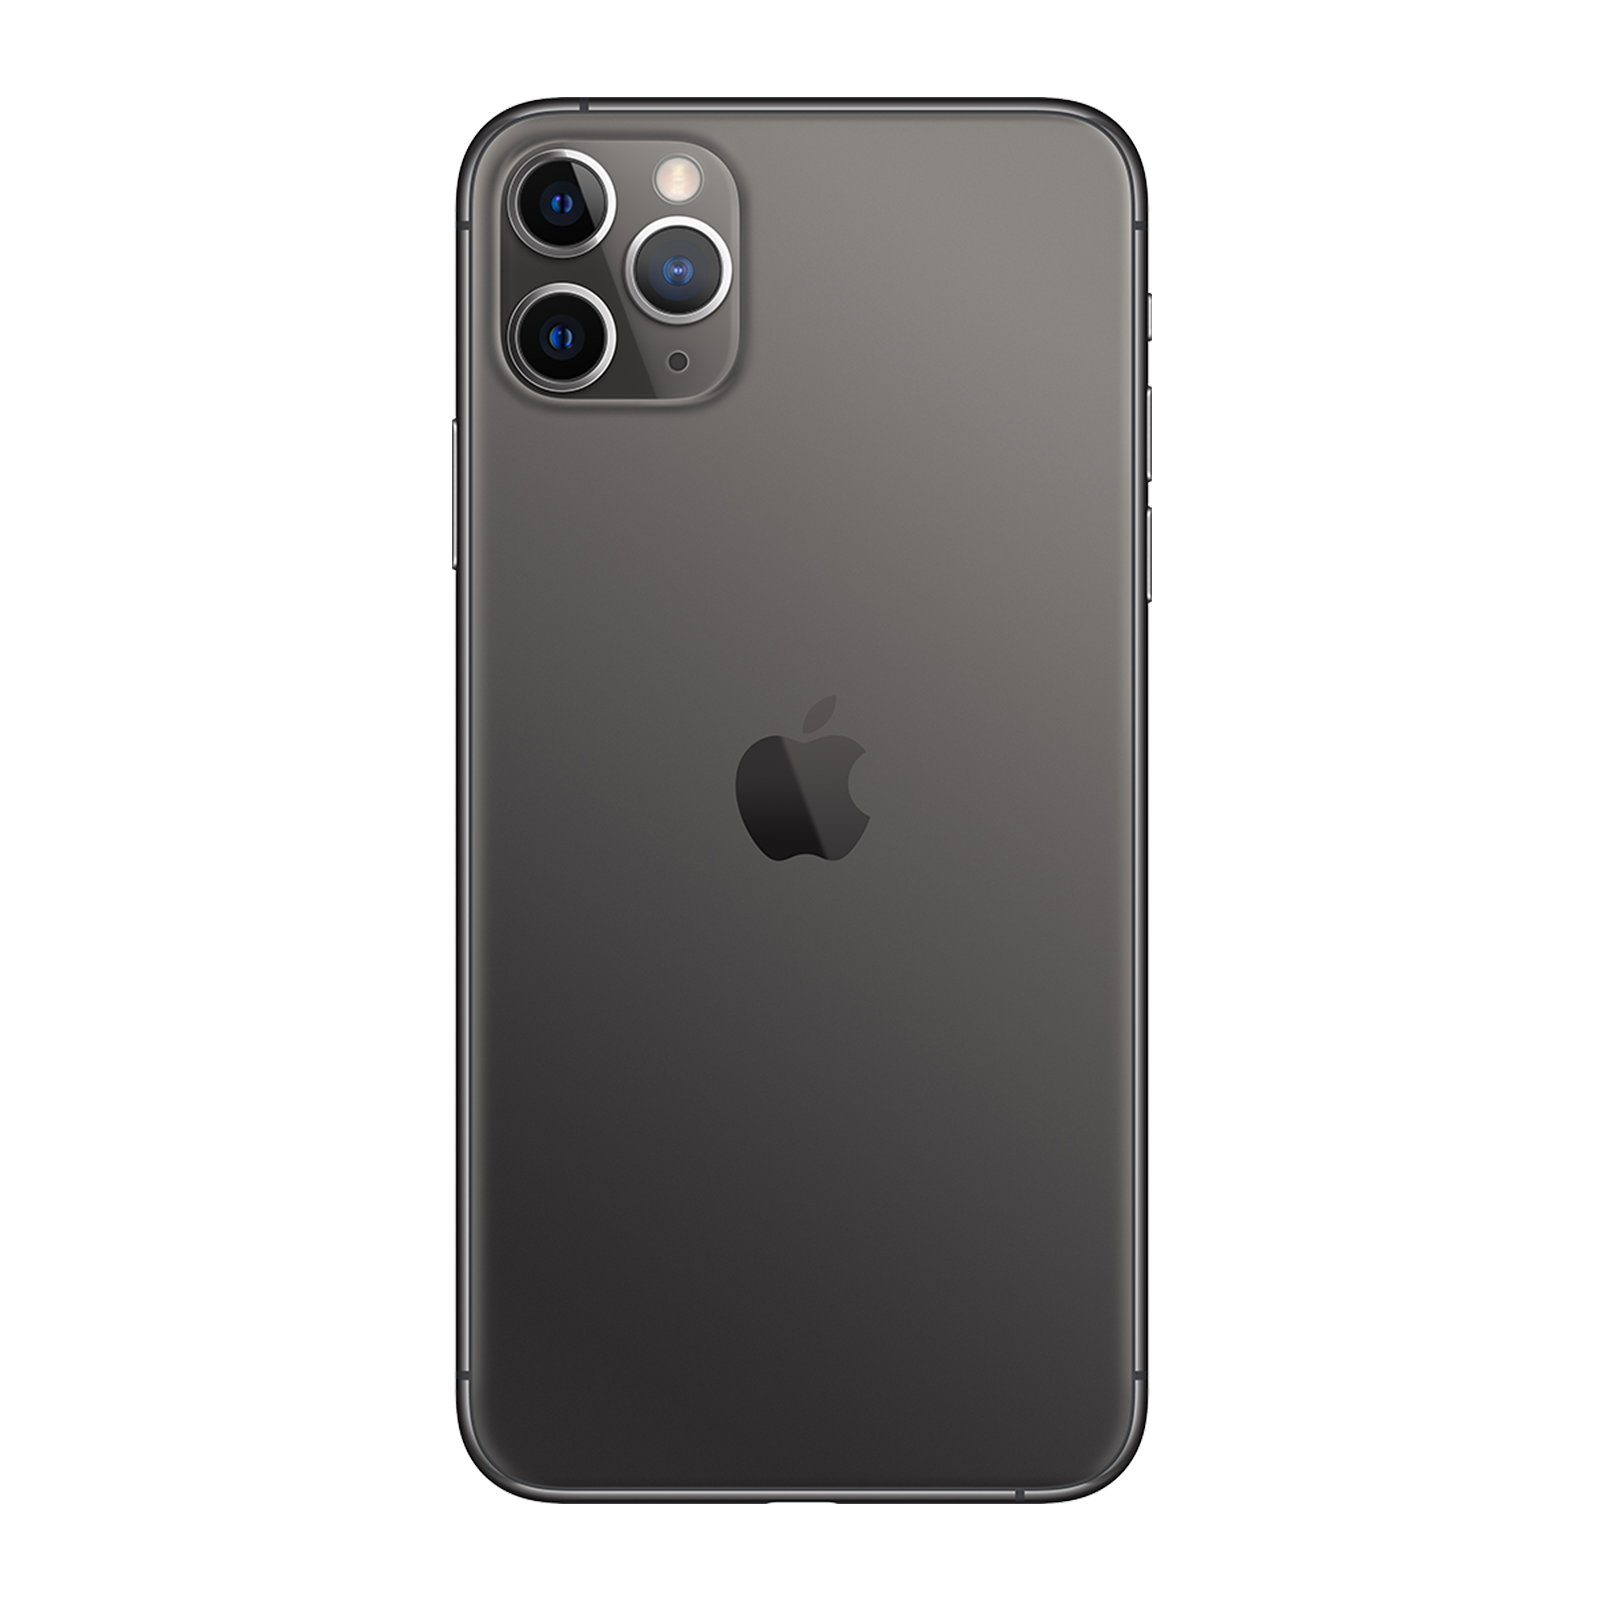 iPhone 11 Pro 512GB Space Grey Pristine - Unlocked